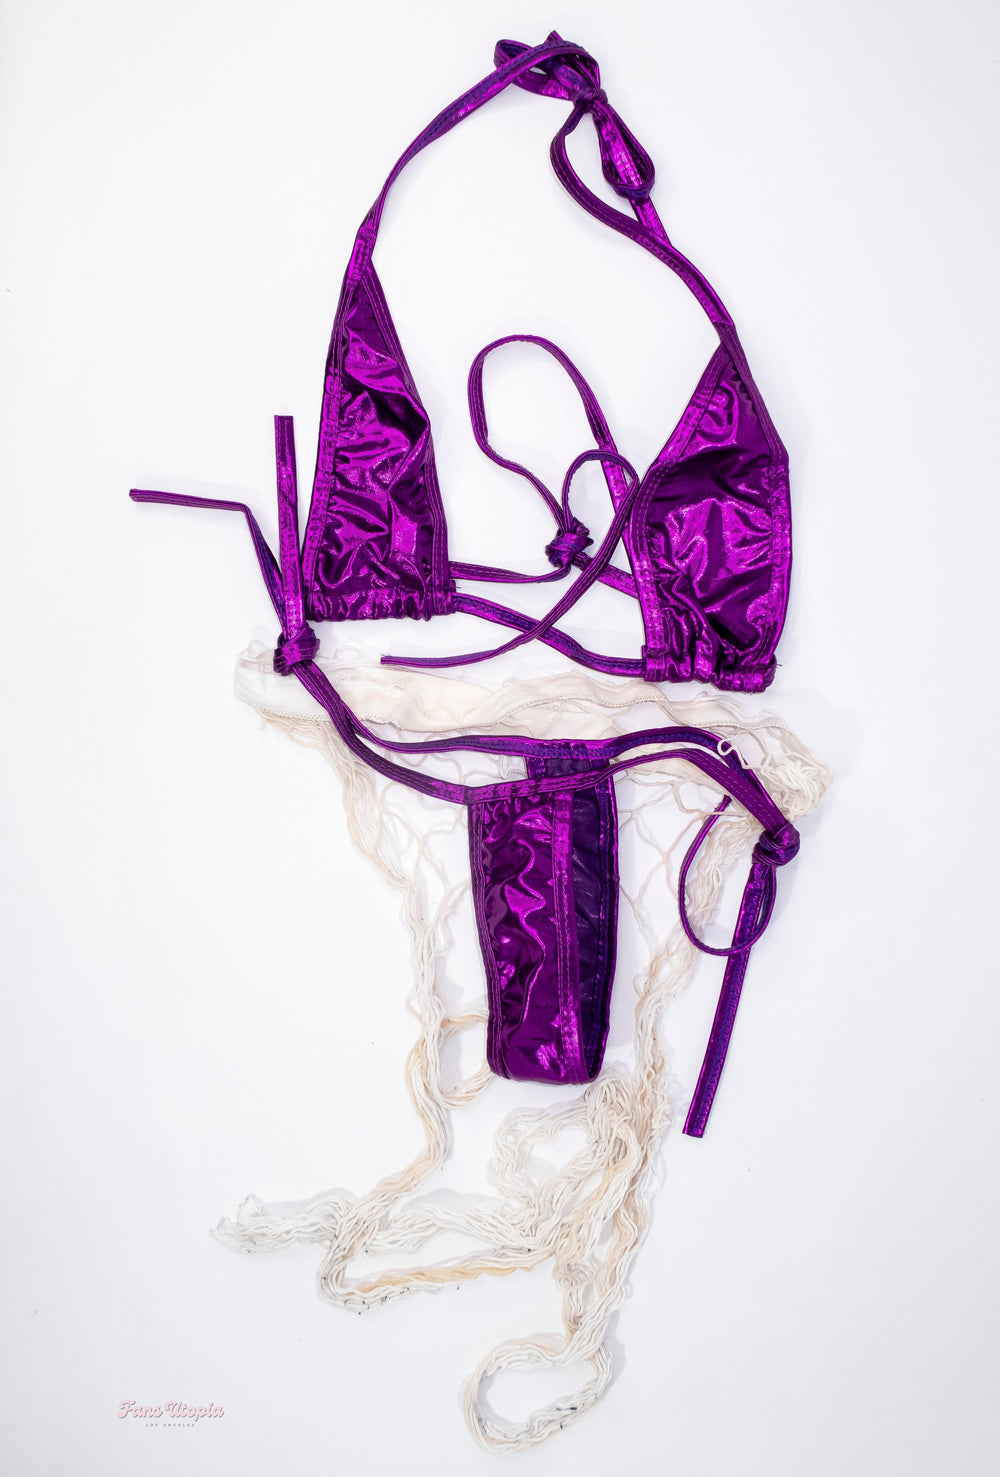 Payton Preslee Metallic Purple Bikini + Fishnets - FANS UTOPIA